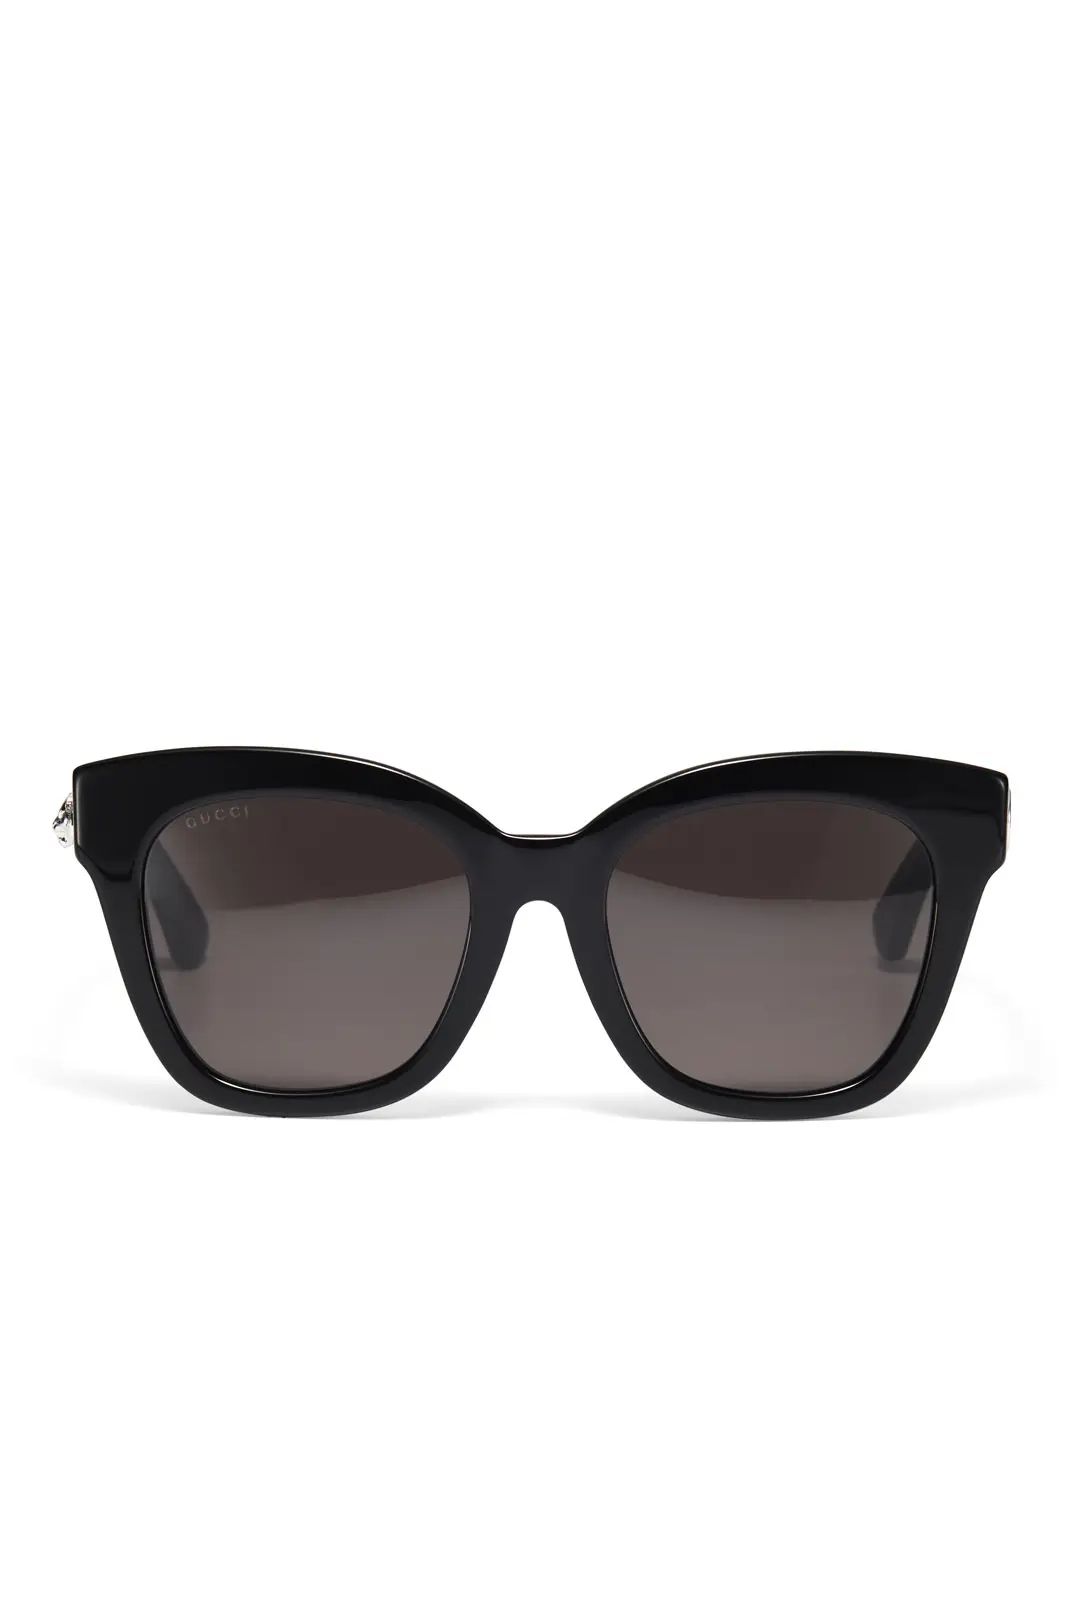 Gucci Black Square Sunglasses | Rent The Runway